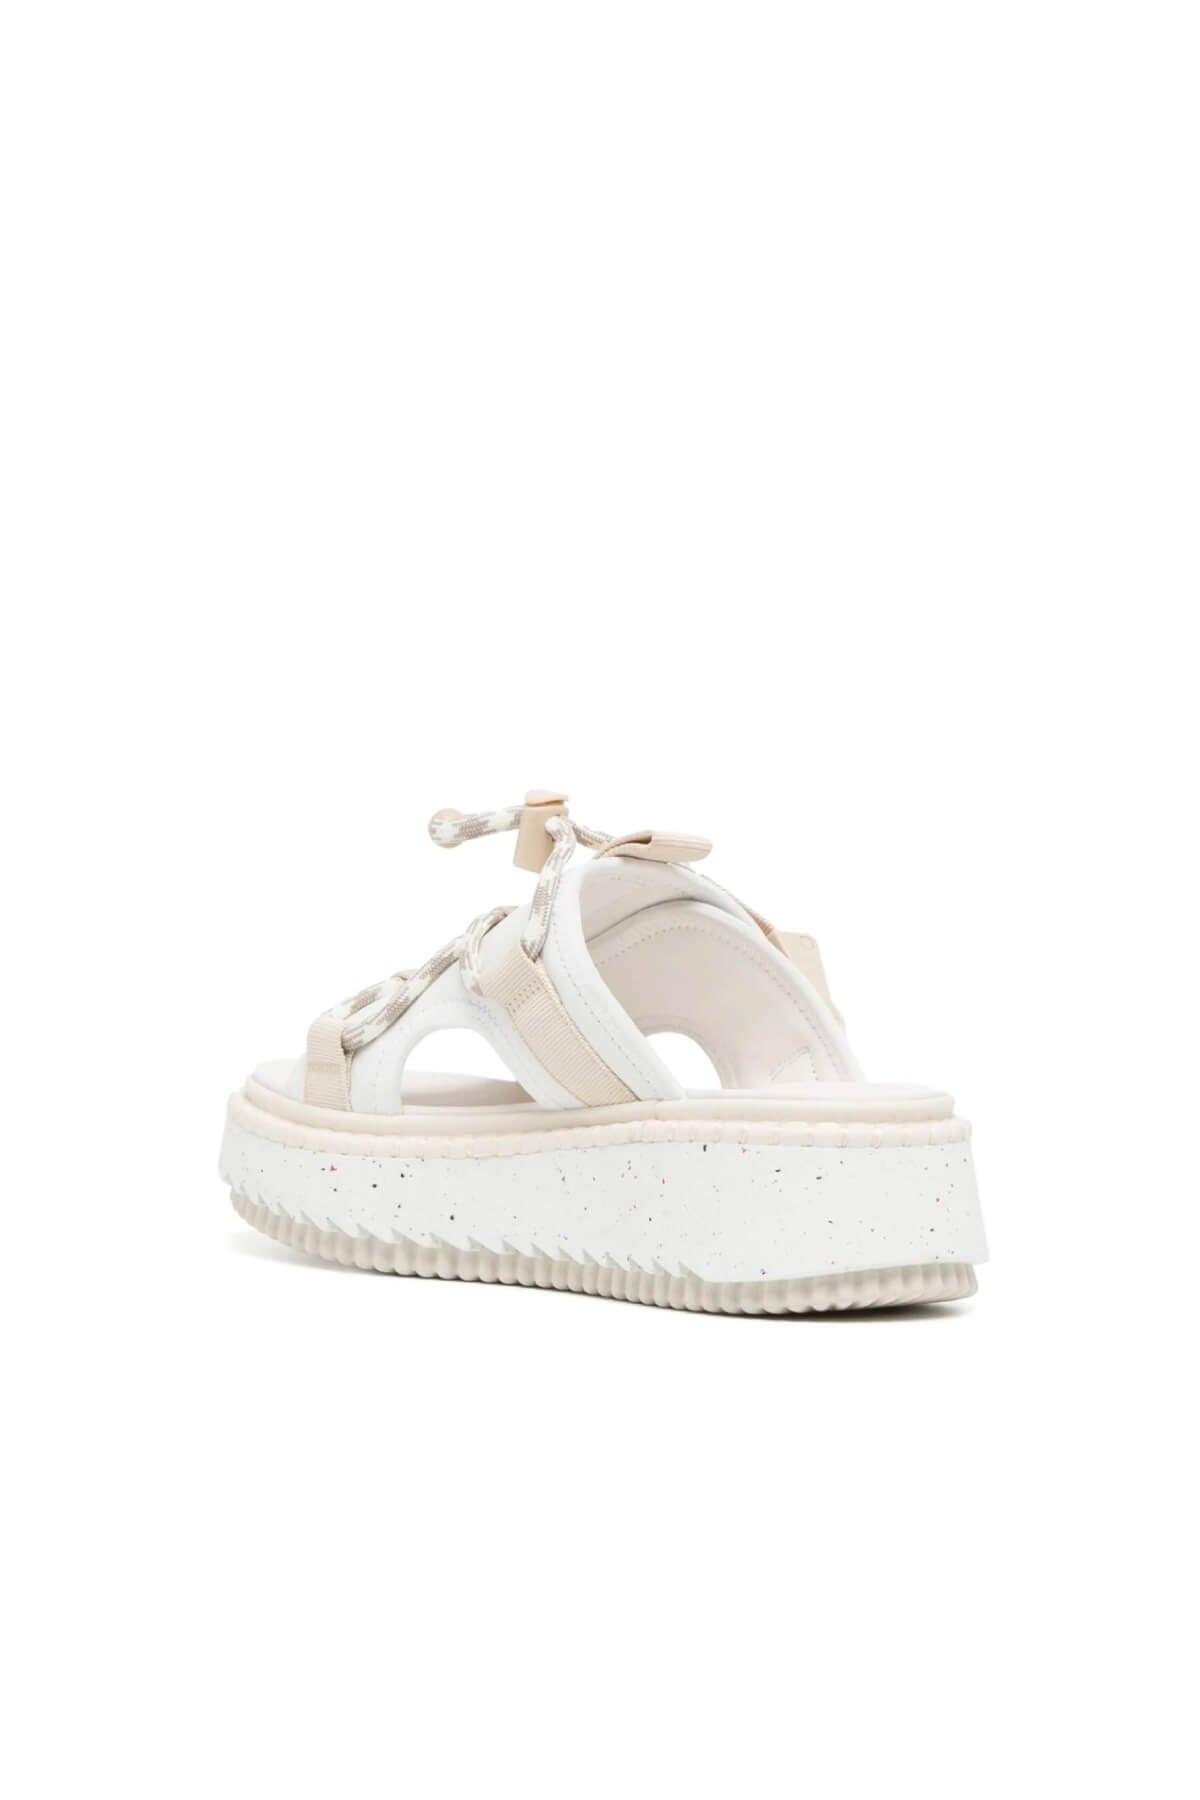 Chloé Lilli Neoprene Sandals - Off White